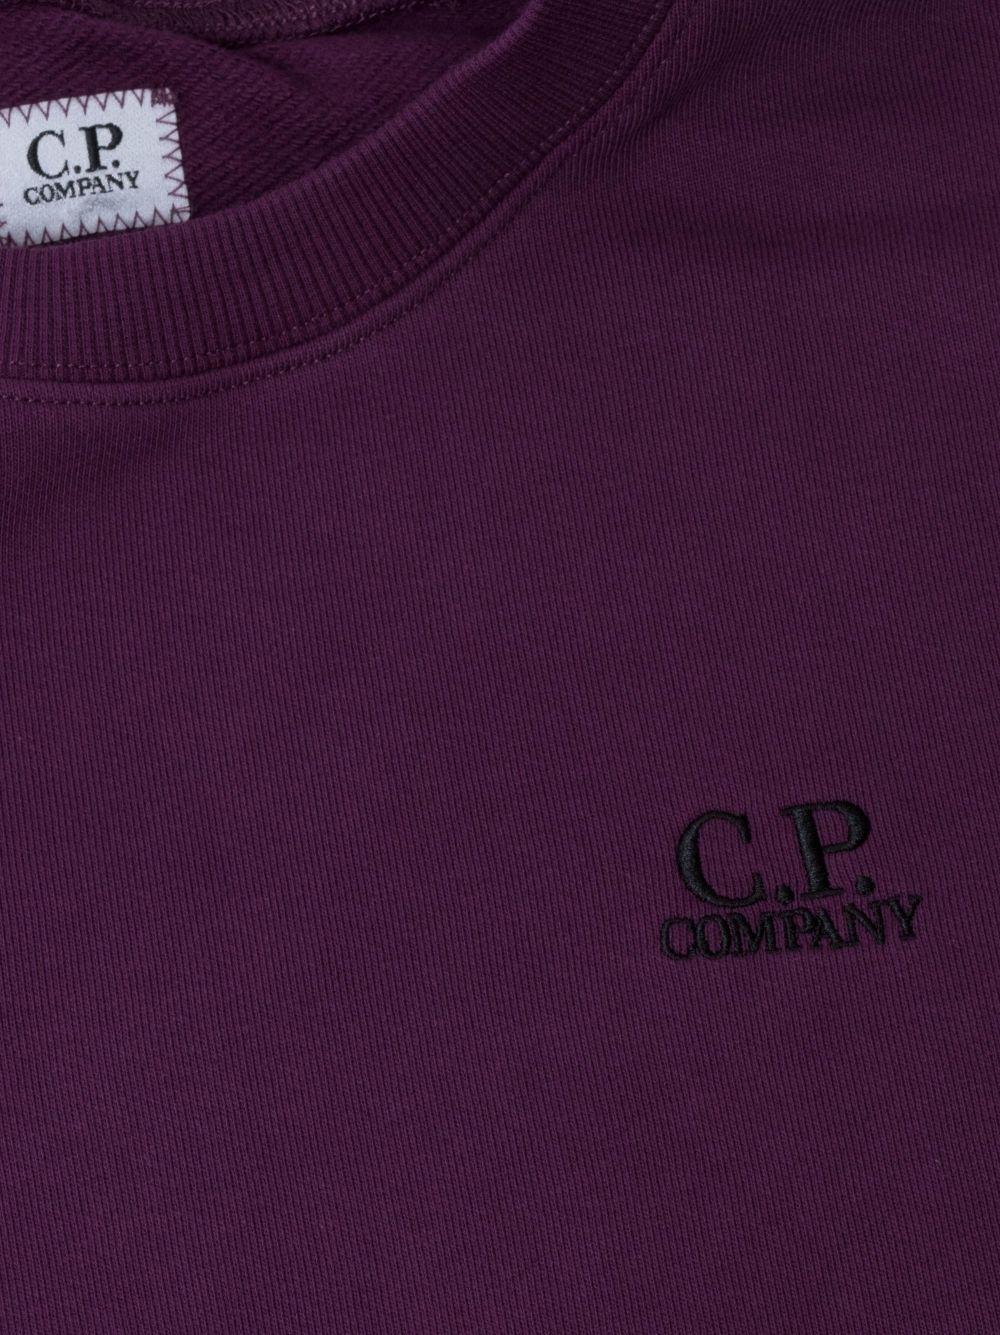 Purple Company Logo - C.P. Company Purple Sweatshirt